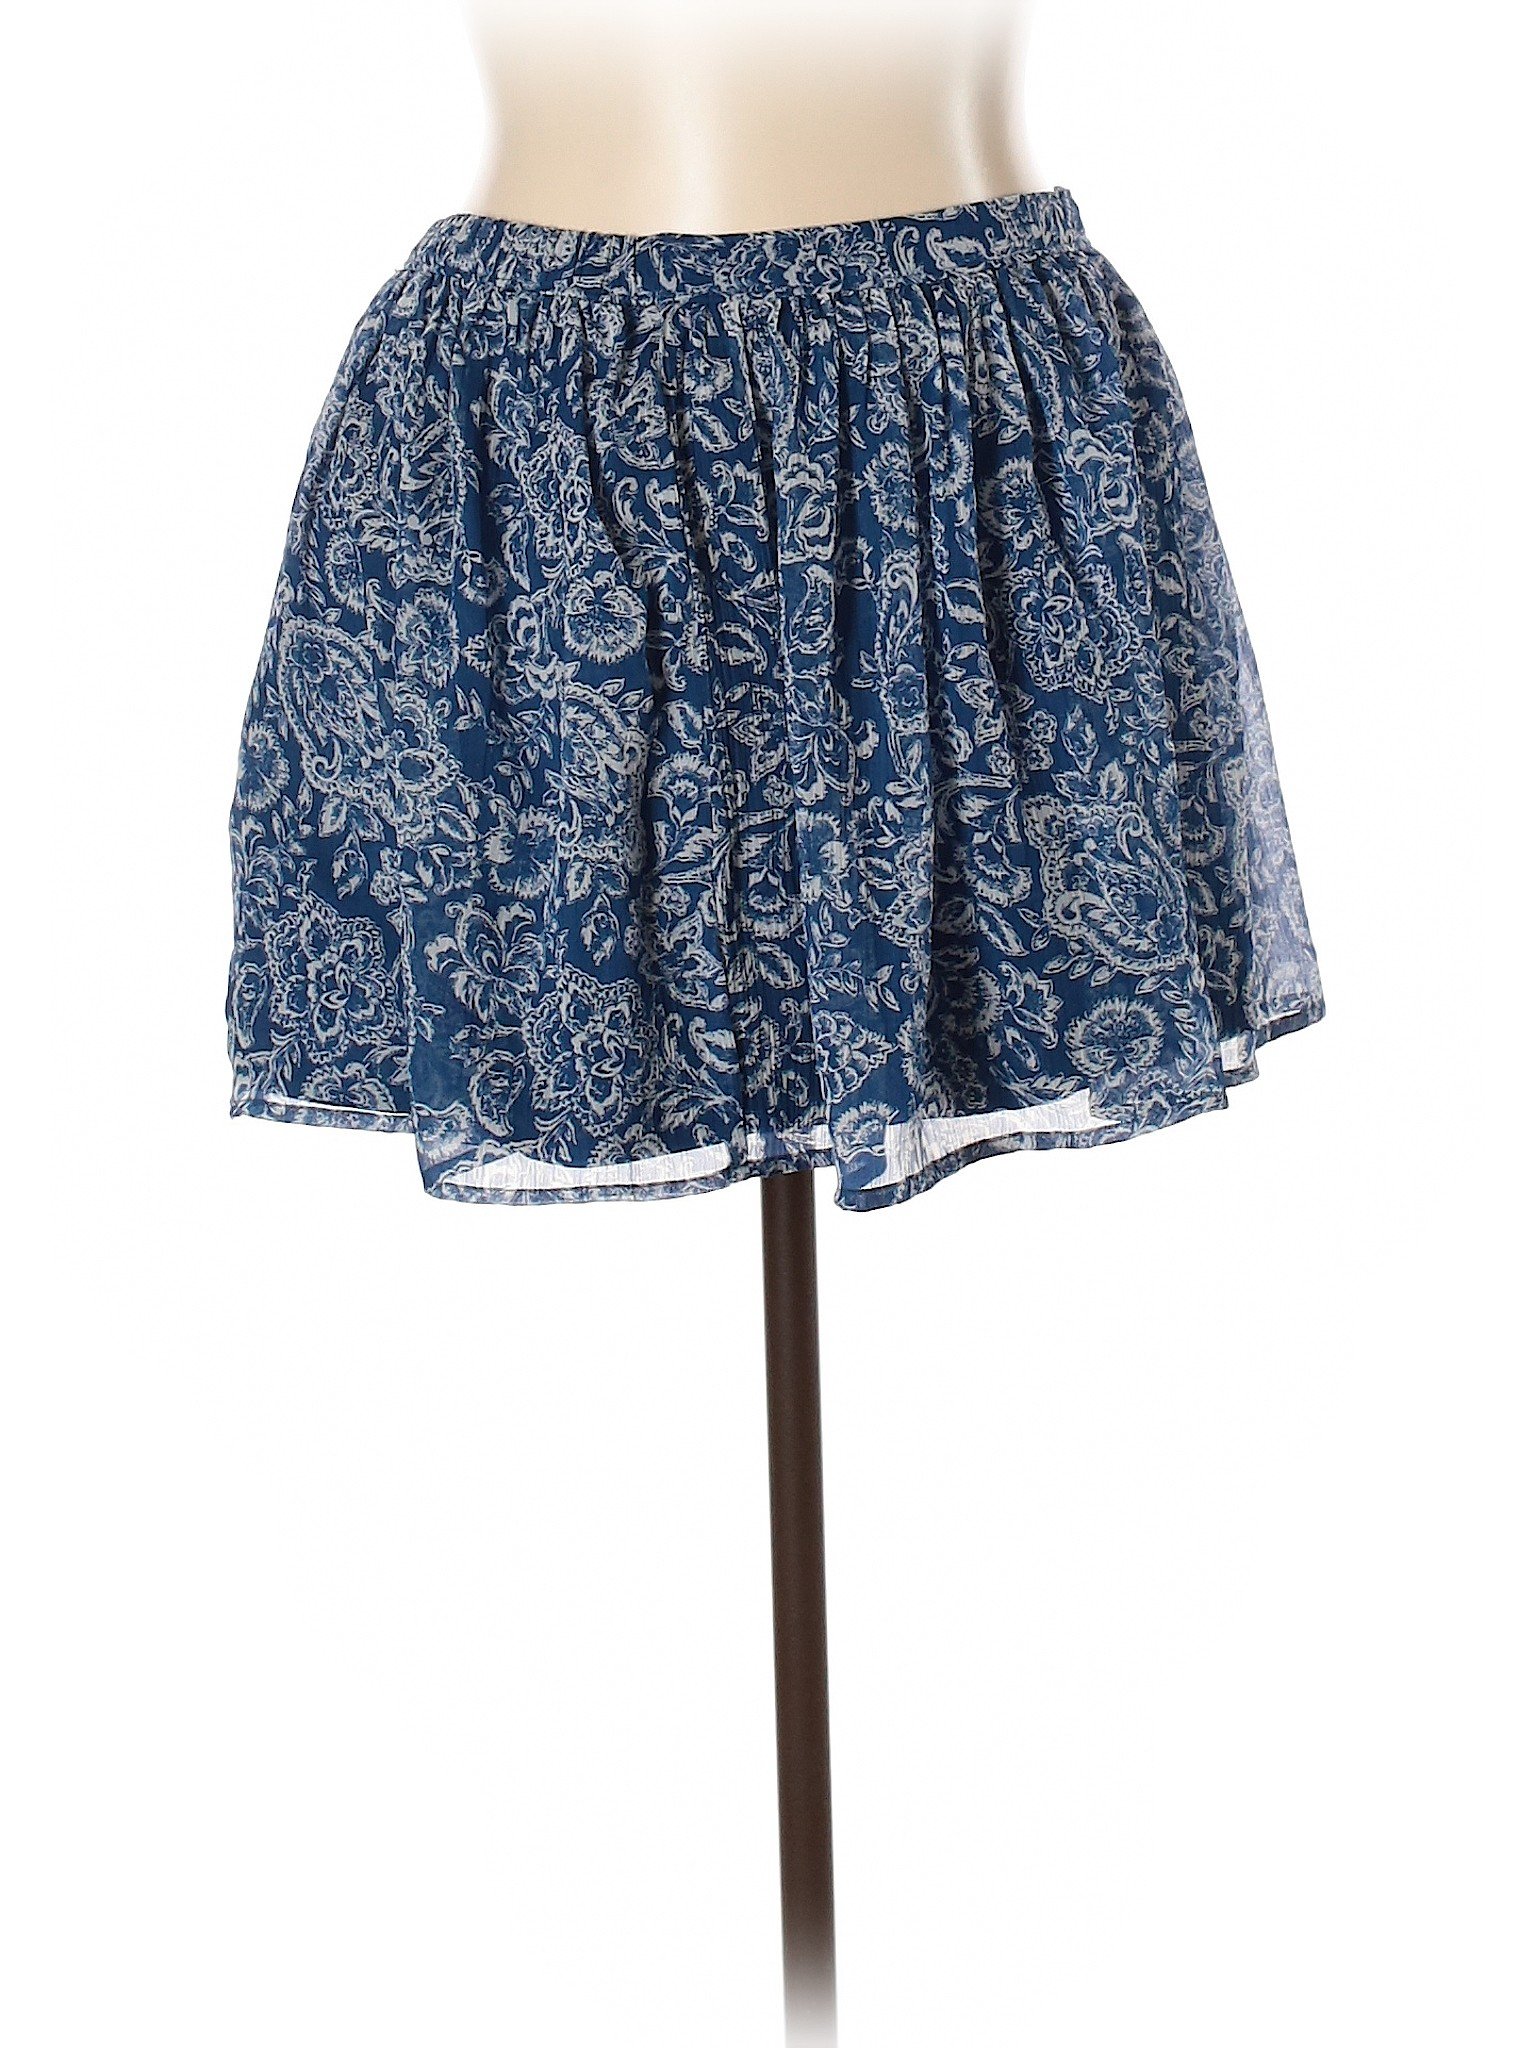 Abercrombie & Fitch Women Blue Casual Skirt L | eBay